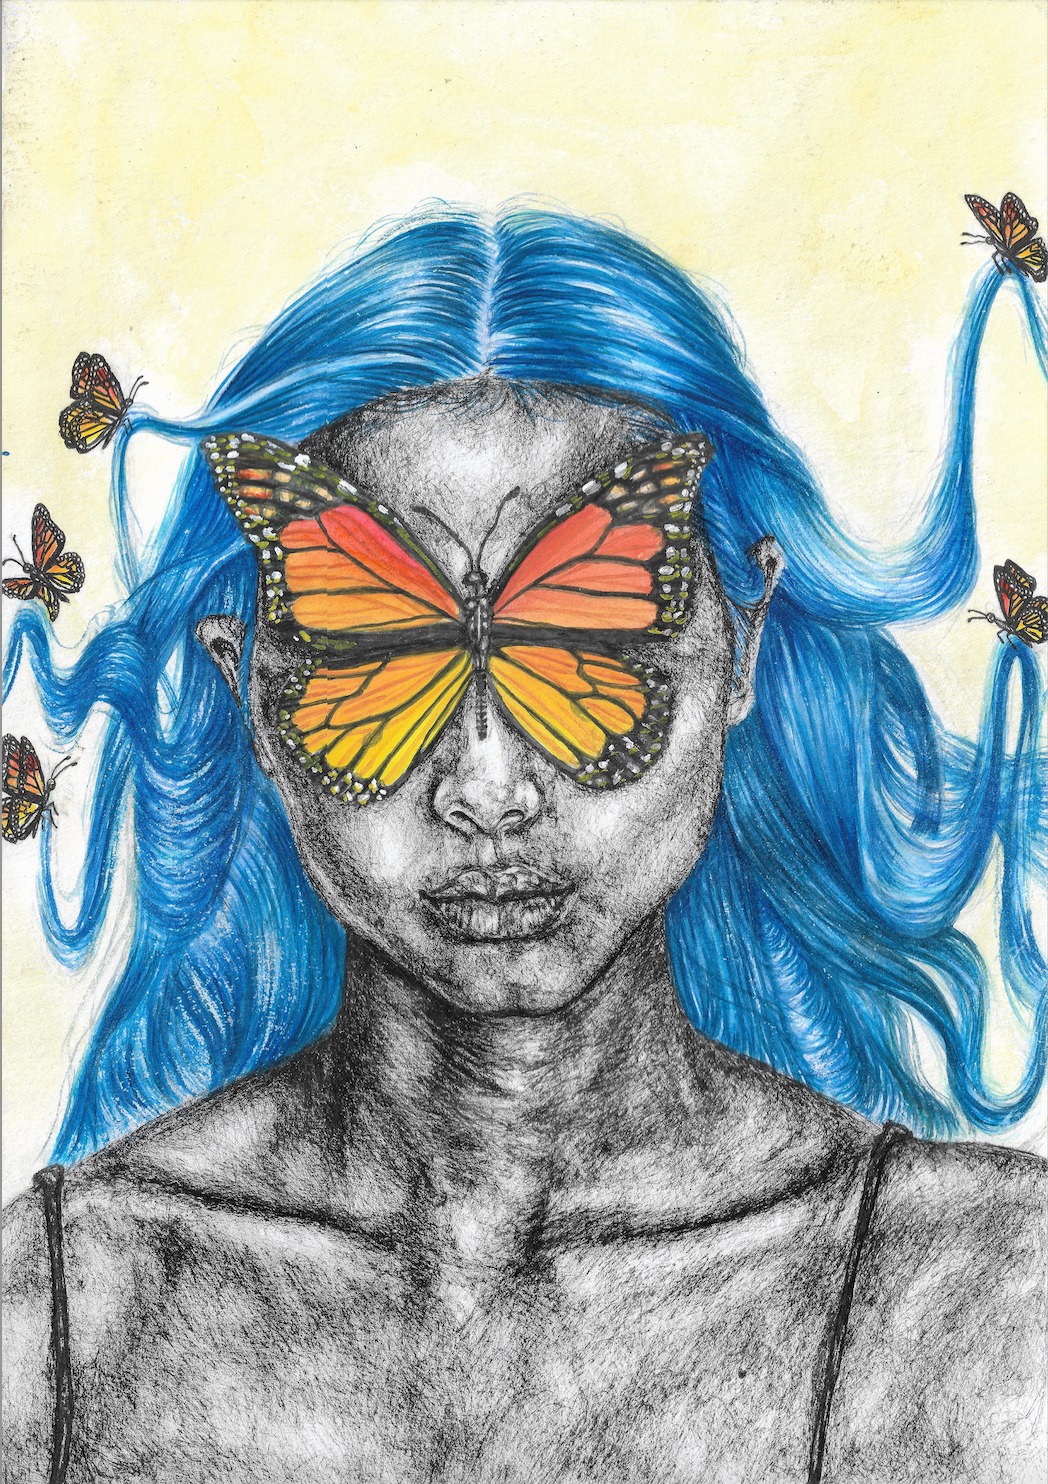 butterflygirl